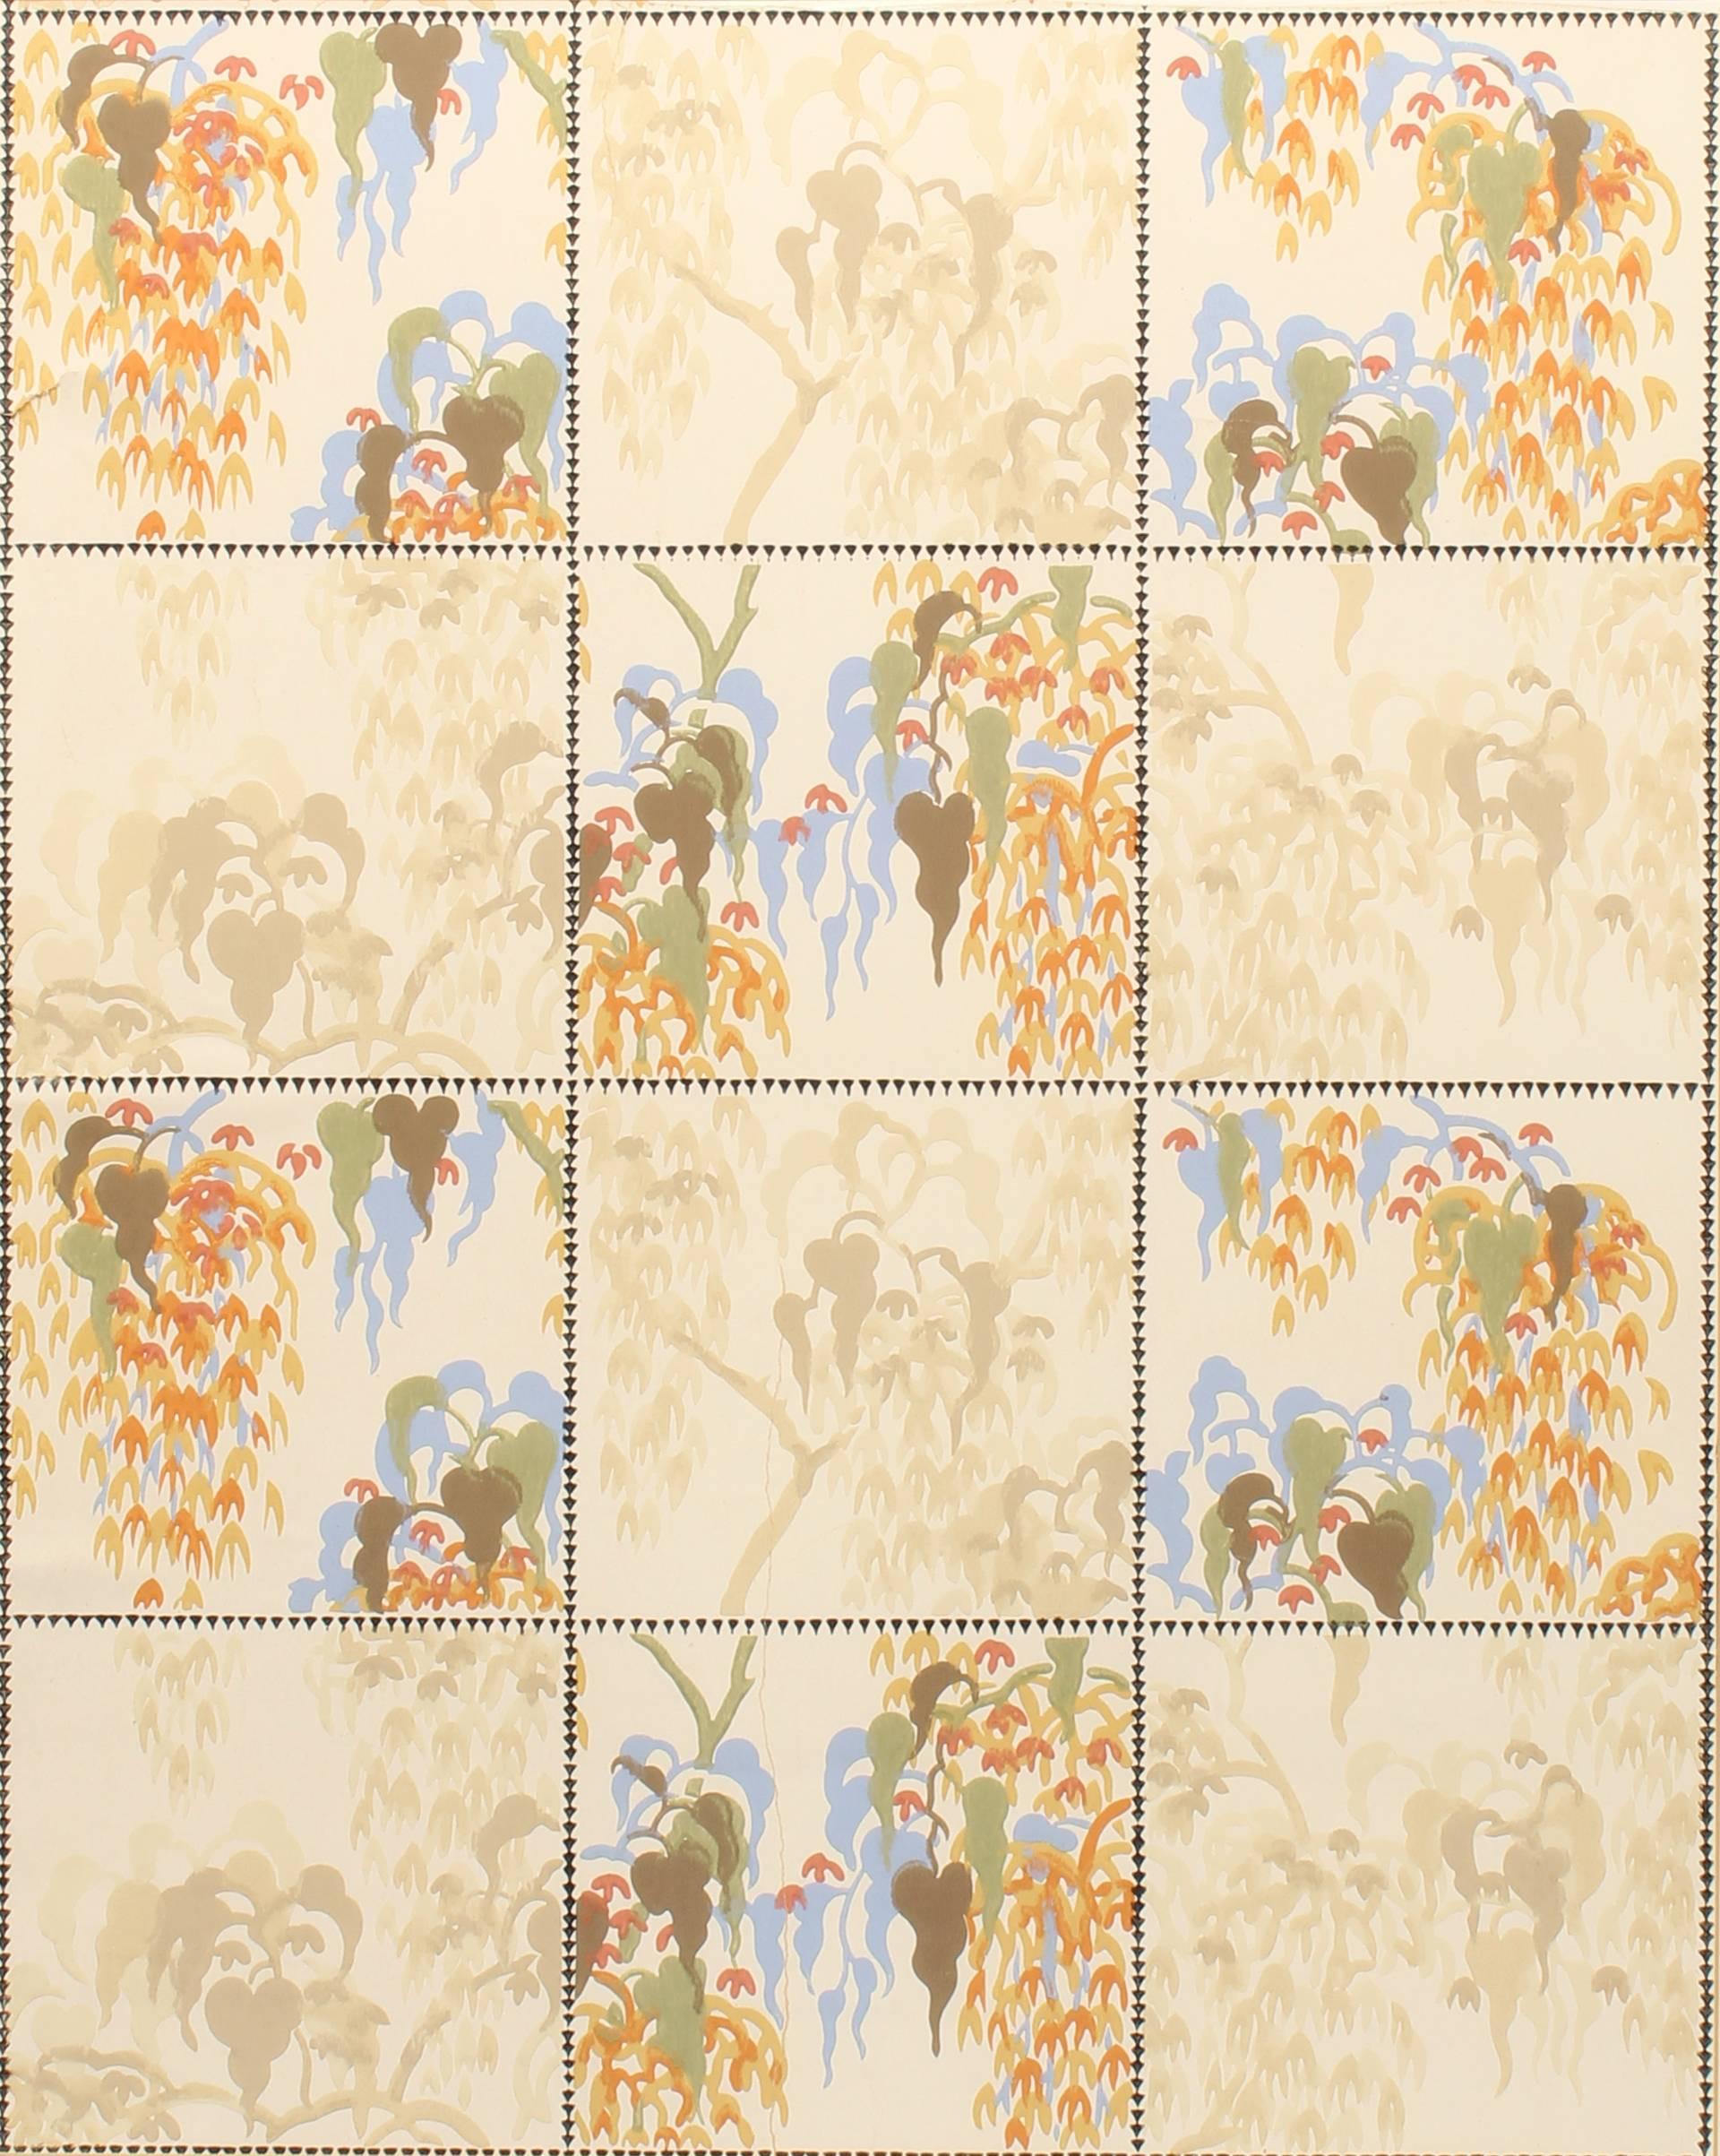 Charles E. Burchfield Abstract Print - Modernist Wall Paper Pattern